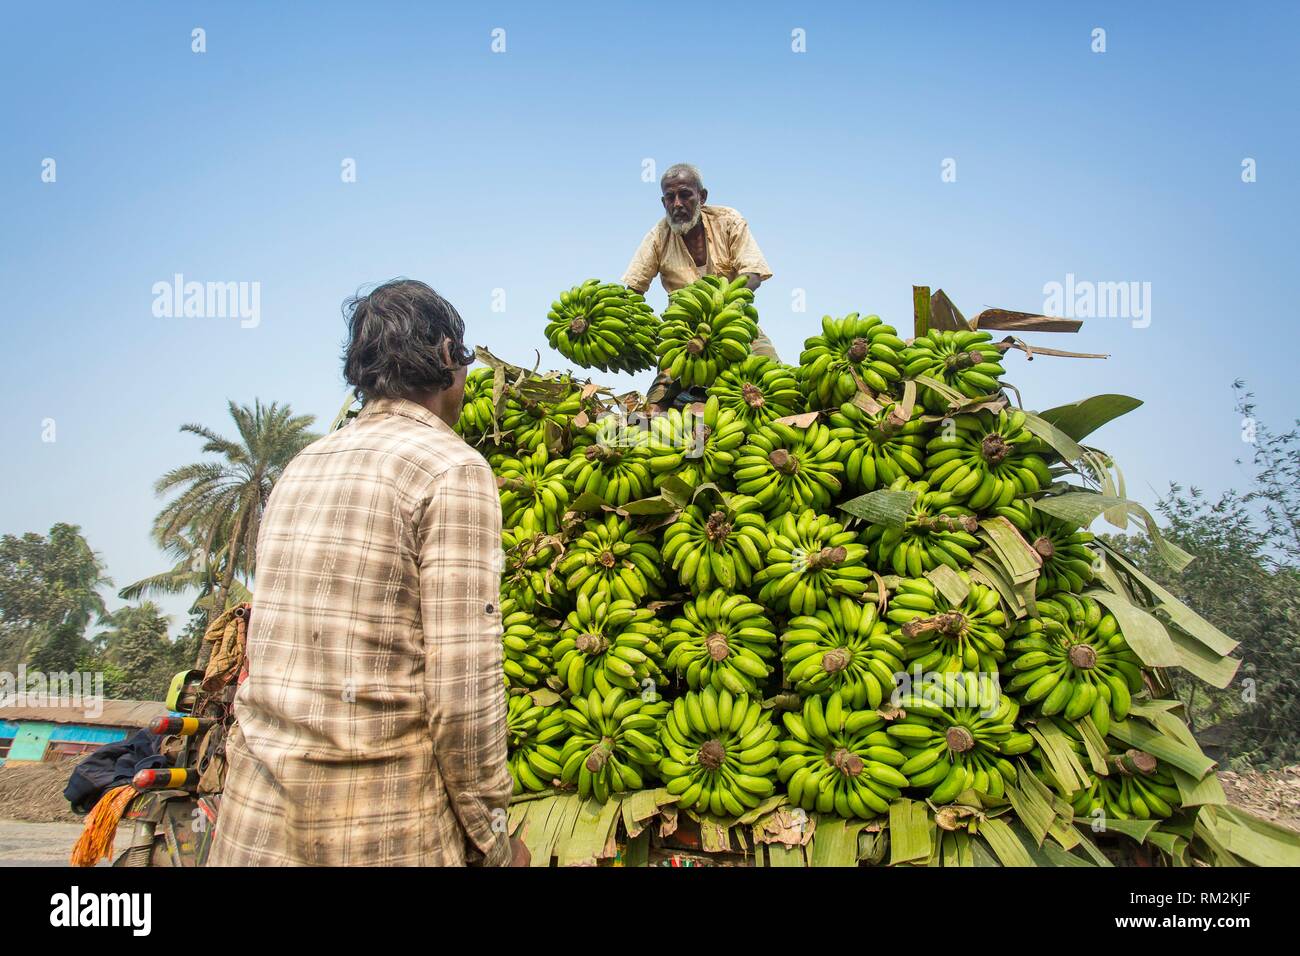 Bangladeshi labors are stacking and loading to pickup van on green bananas for sending them to wholesale vegetable markets, at modhupur bazaar, Stock Photo